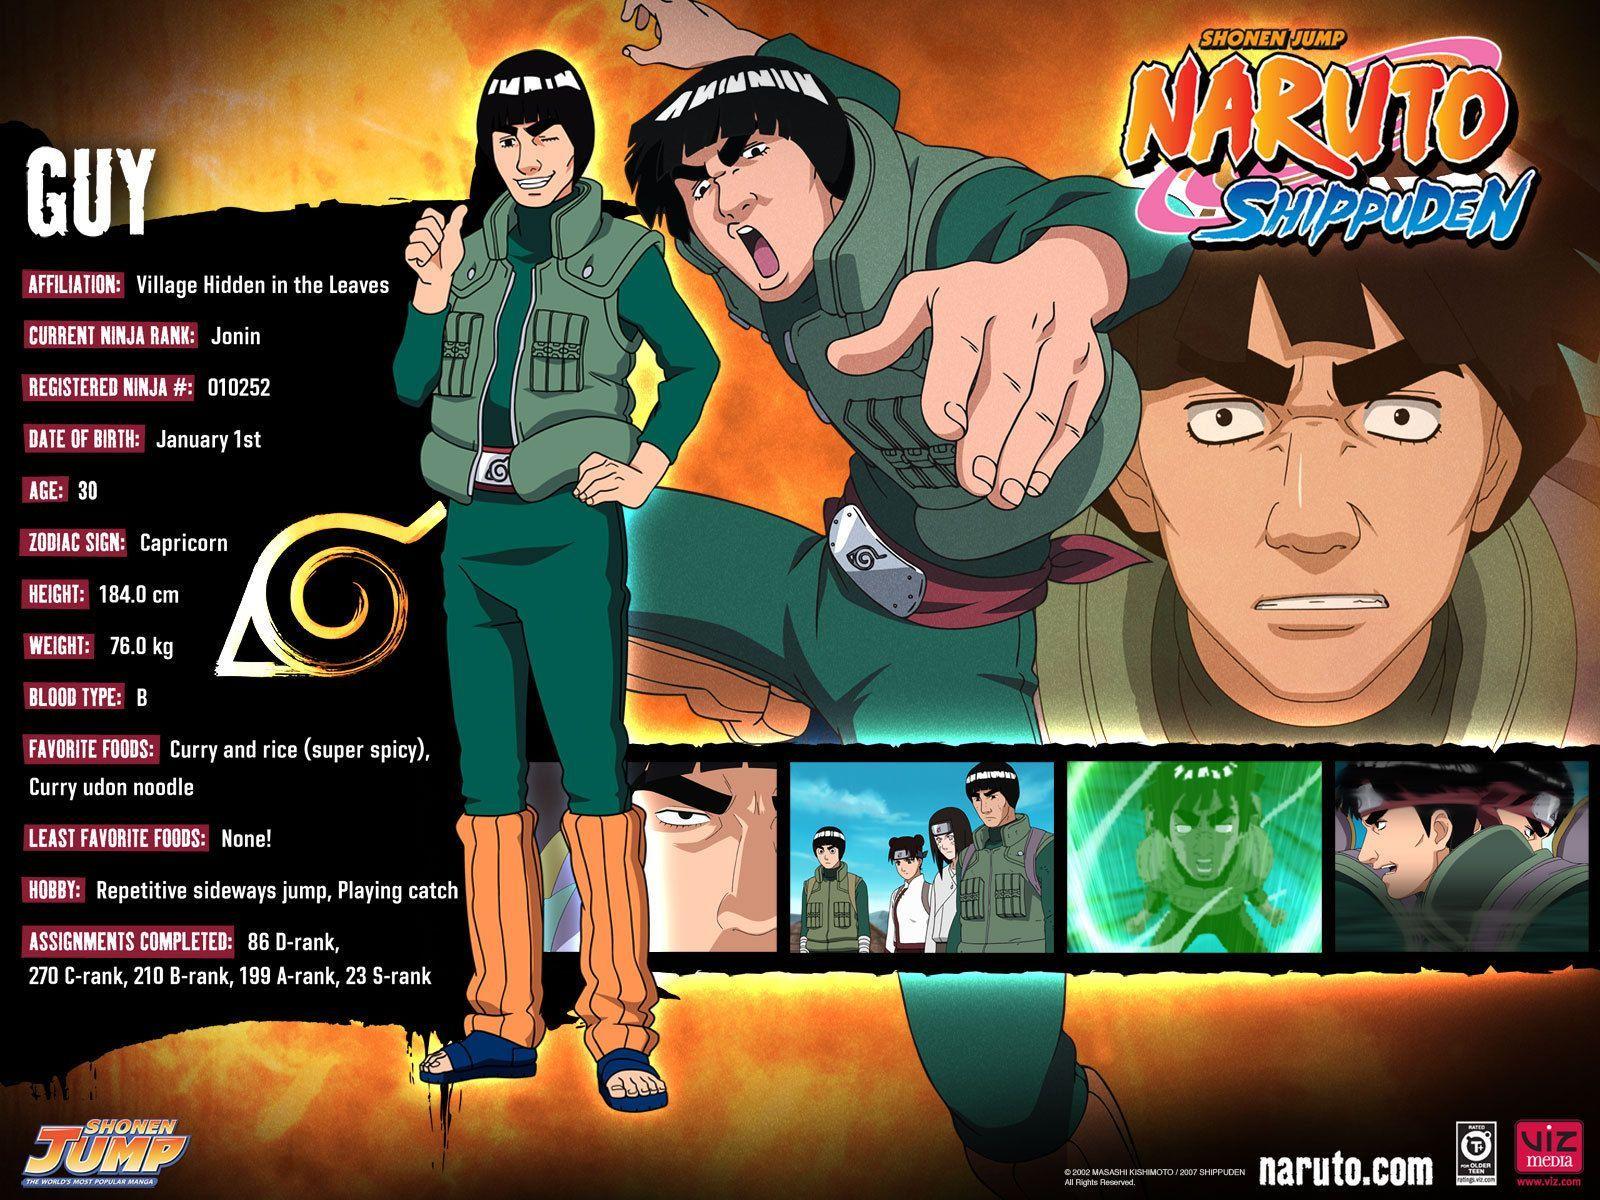 Anime Naruto Shippuden Wallpaper HD For Mac